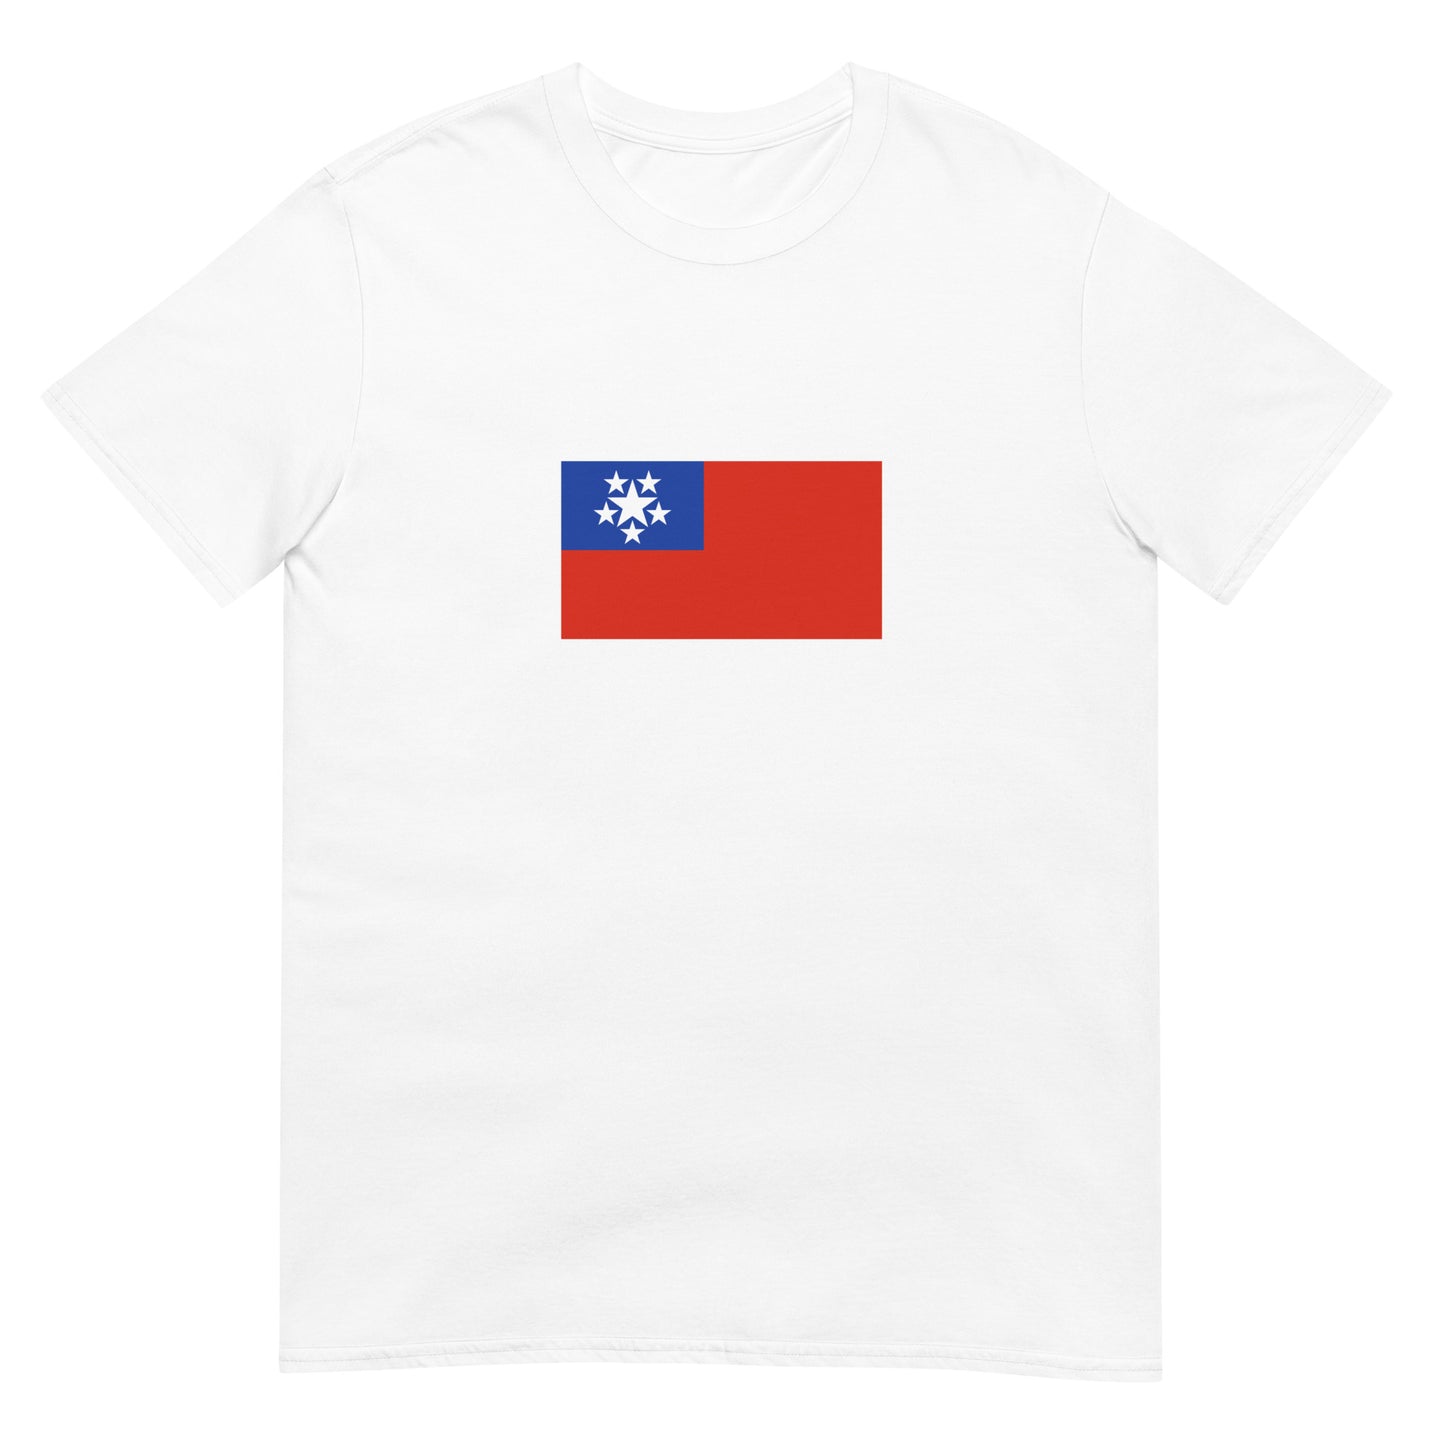 Myanmar (Burma) - Union of Burma (1948-1974) | Historical Flag Short-Sleeve Unisex T-Shirt